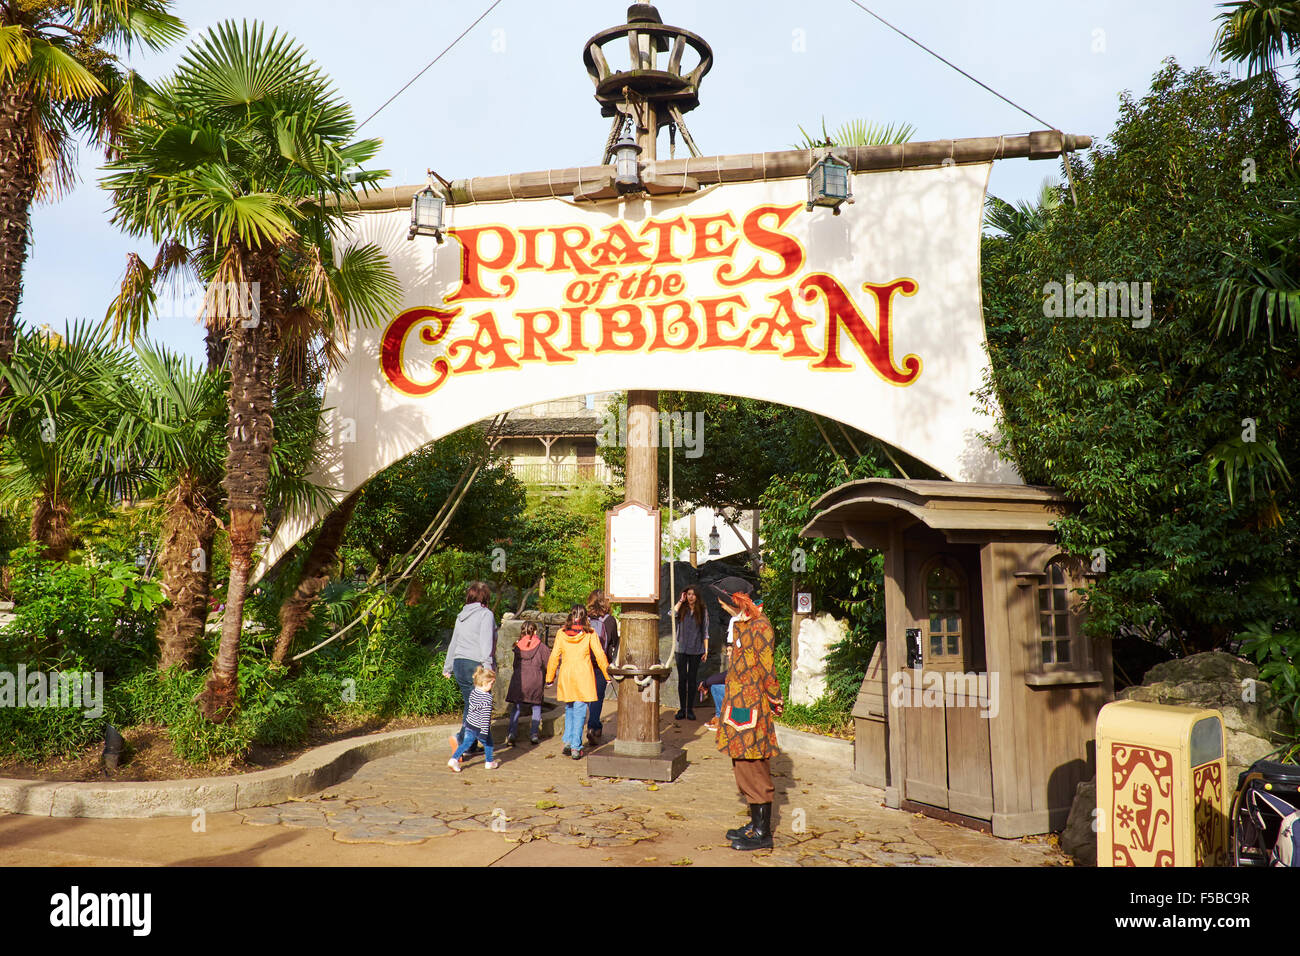 Pirates Of The Caribbean Ride In Adventureland Disneyland Paris Marne-la-Vallee Chessy France Stock Photo